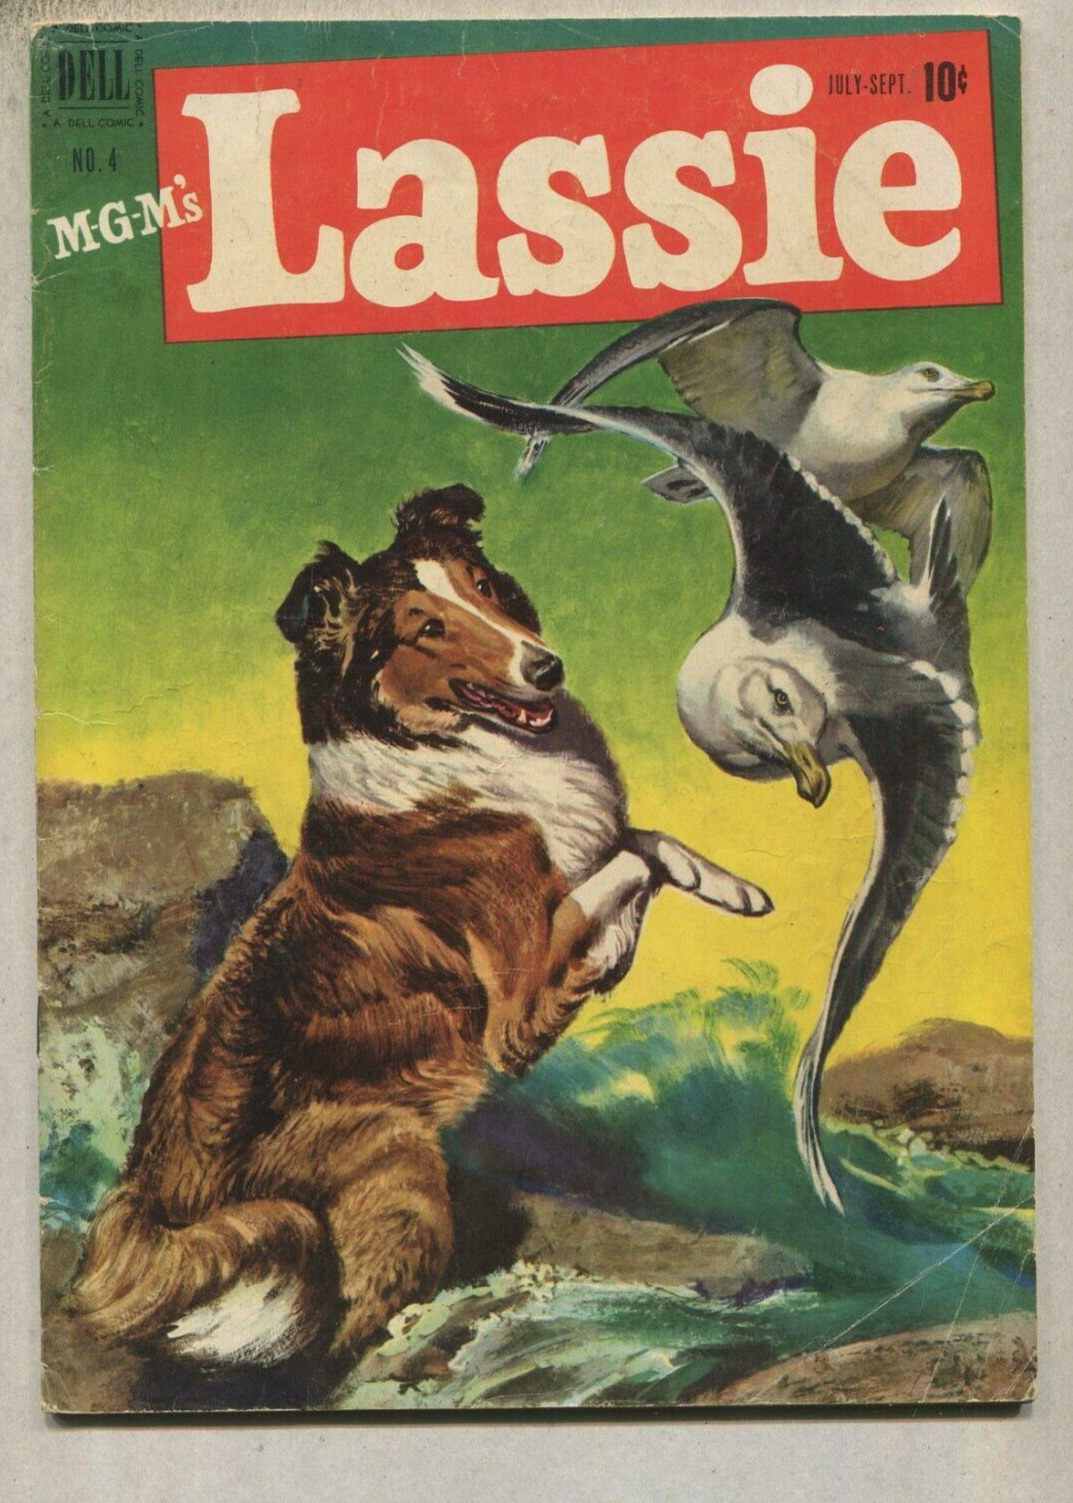 M-G-M\'s Lassie  #4 VG+ 1951  Marooned  Dell  Comics CBX201